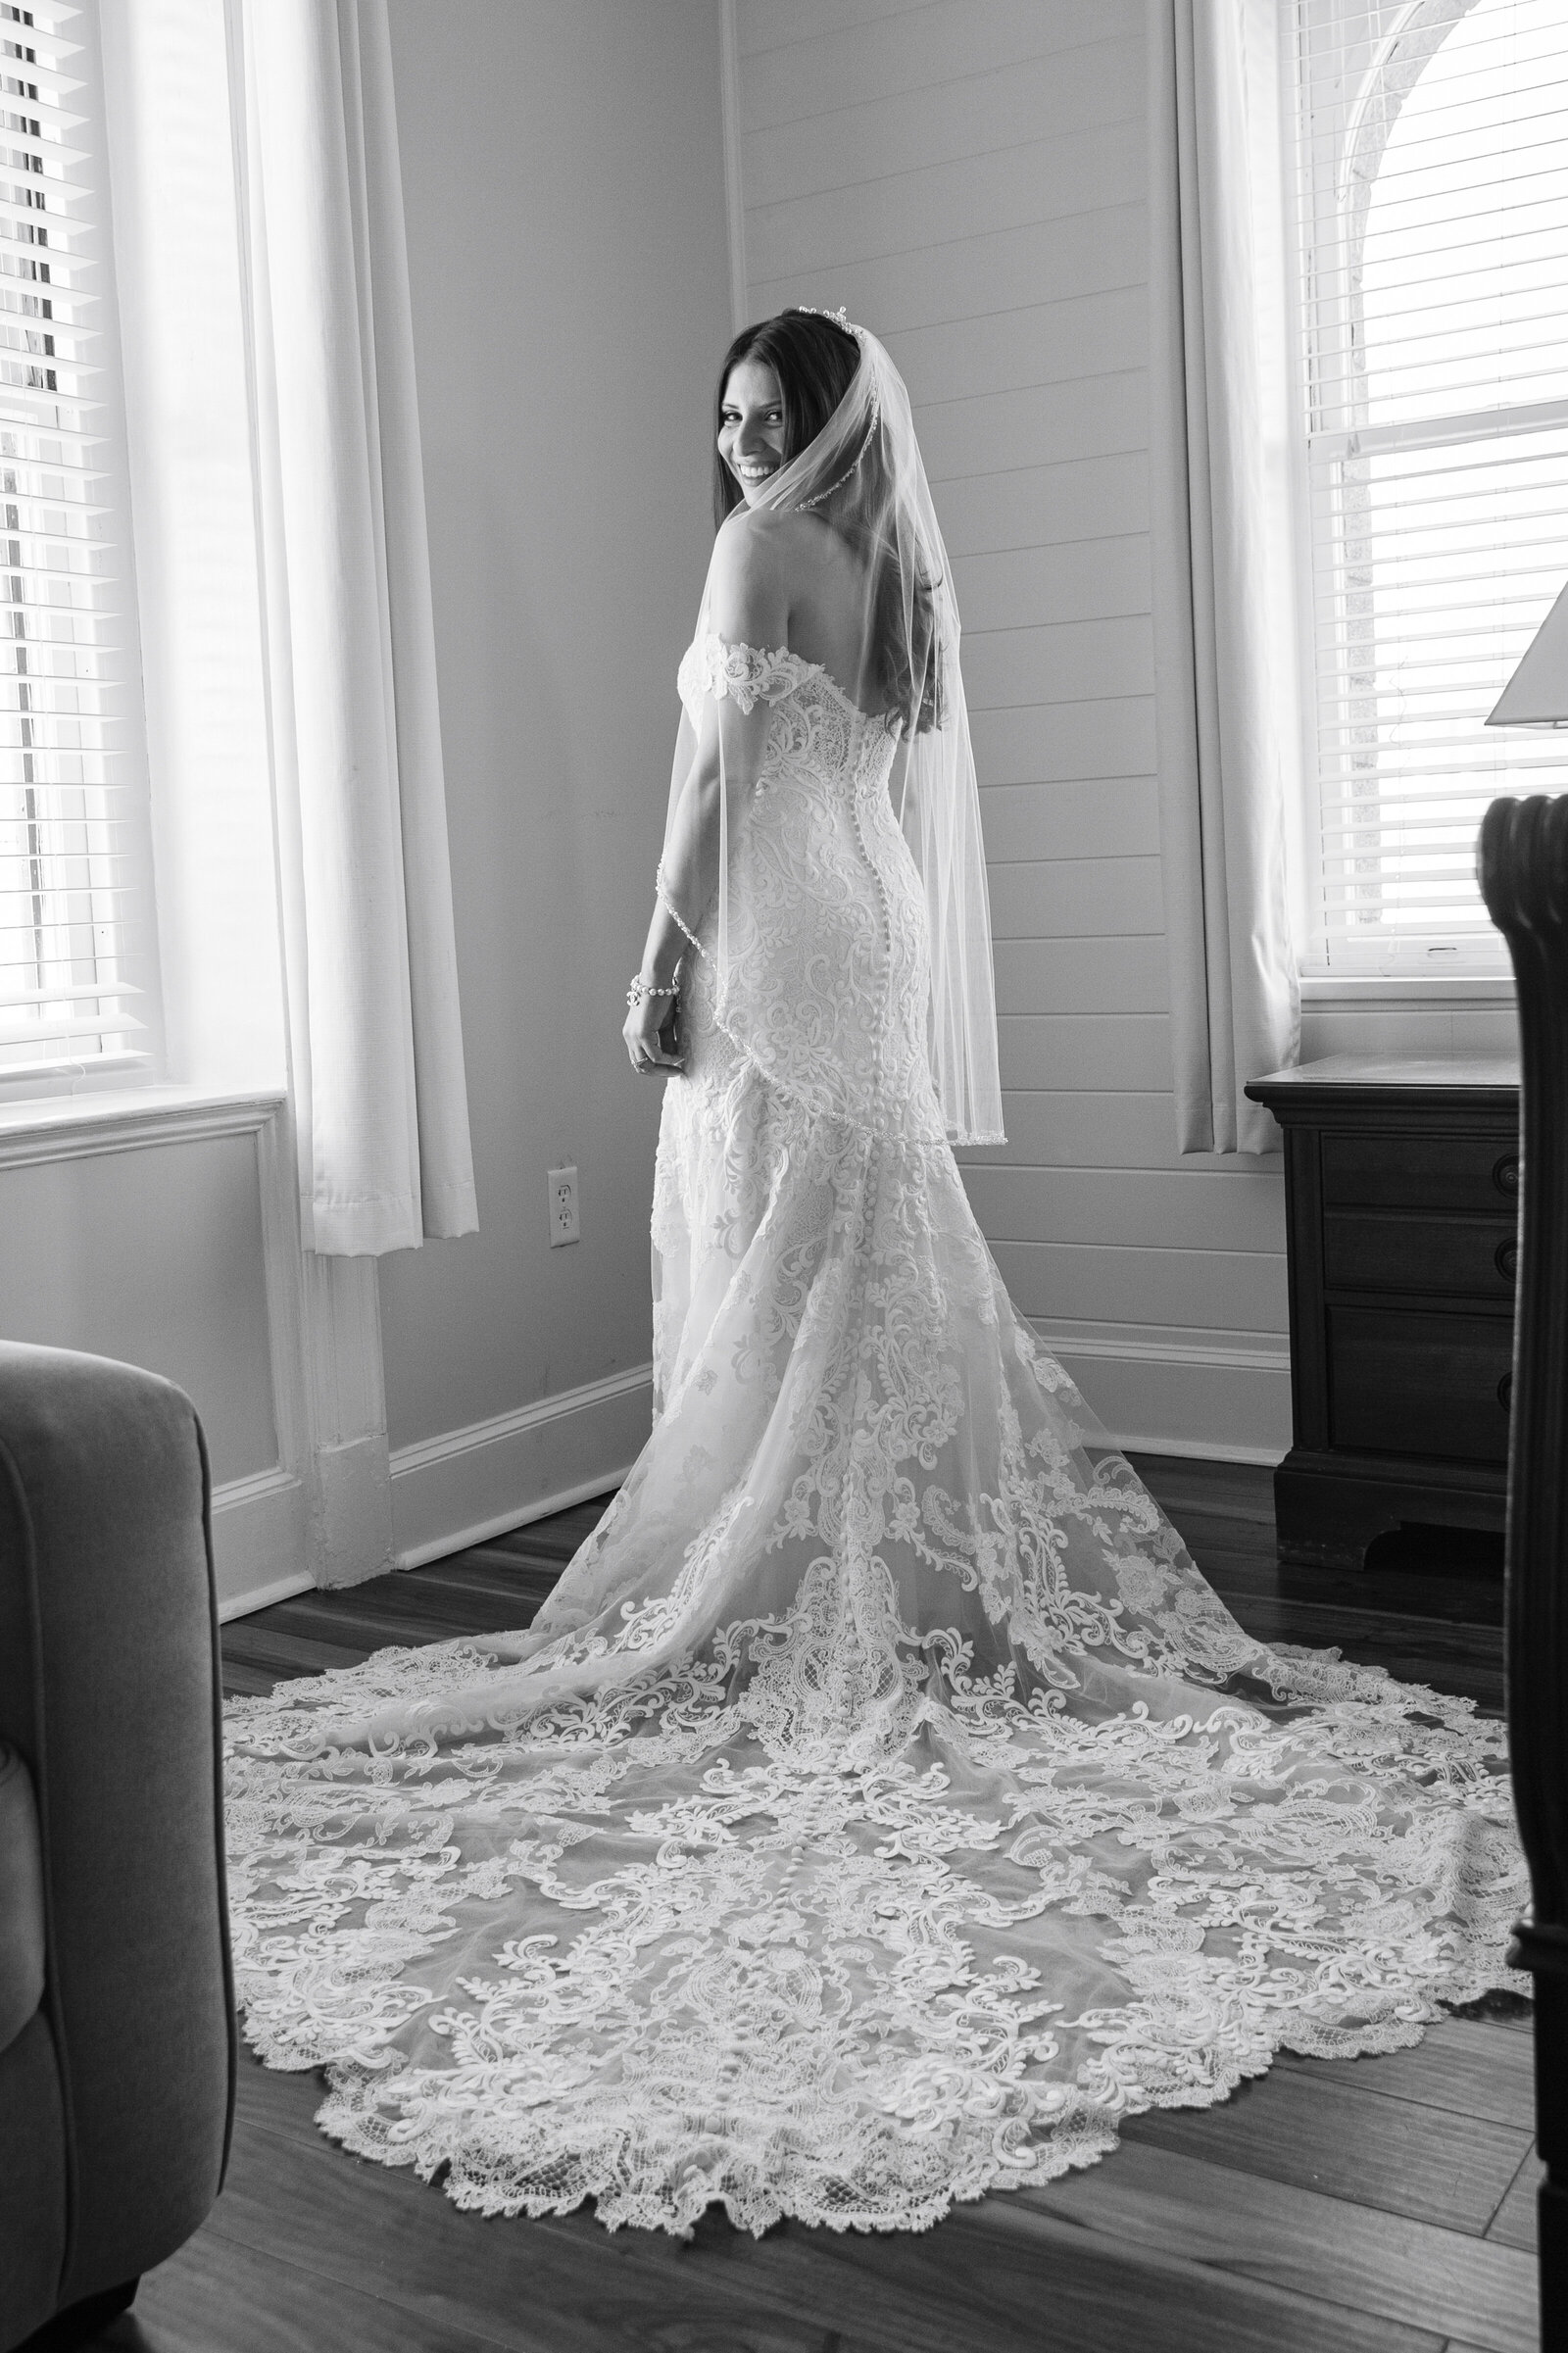 New-England-Wedding-Photographer-Sabrina-Scolari-15